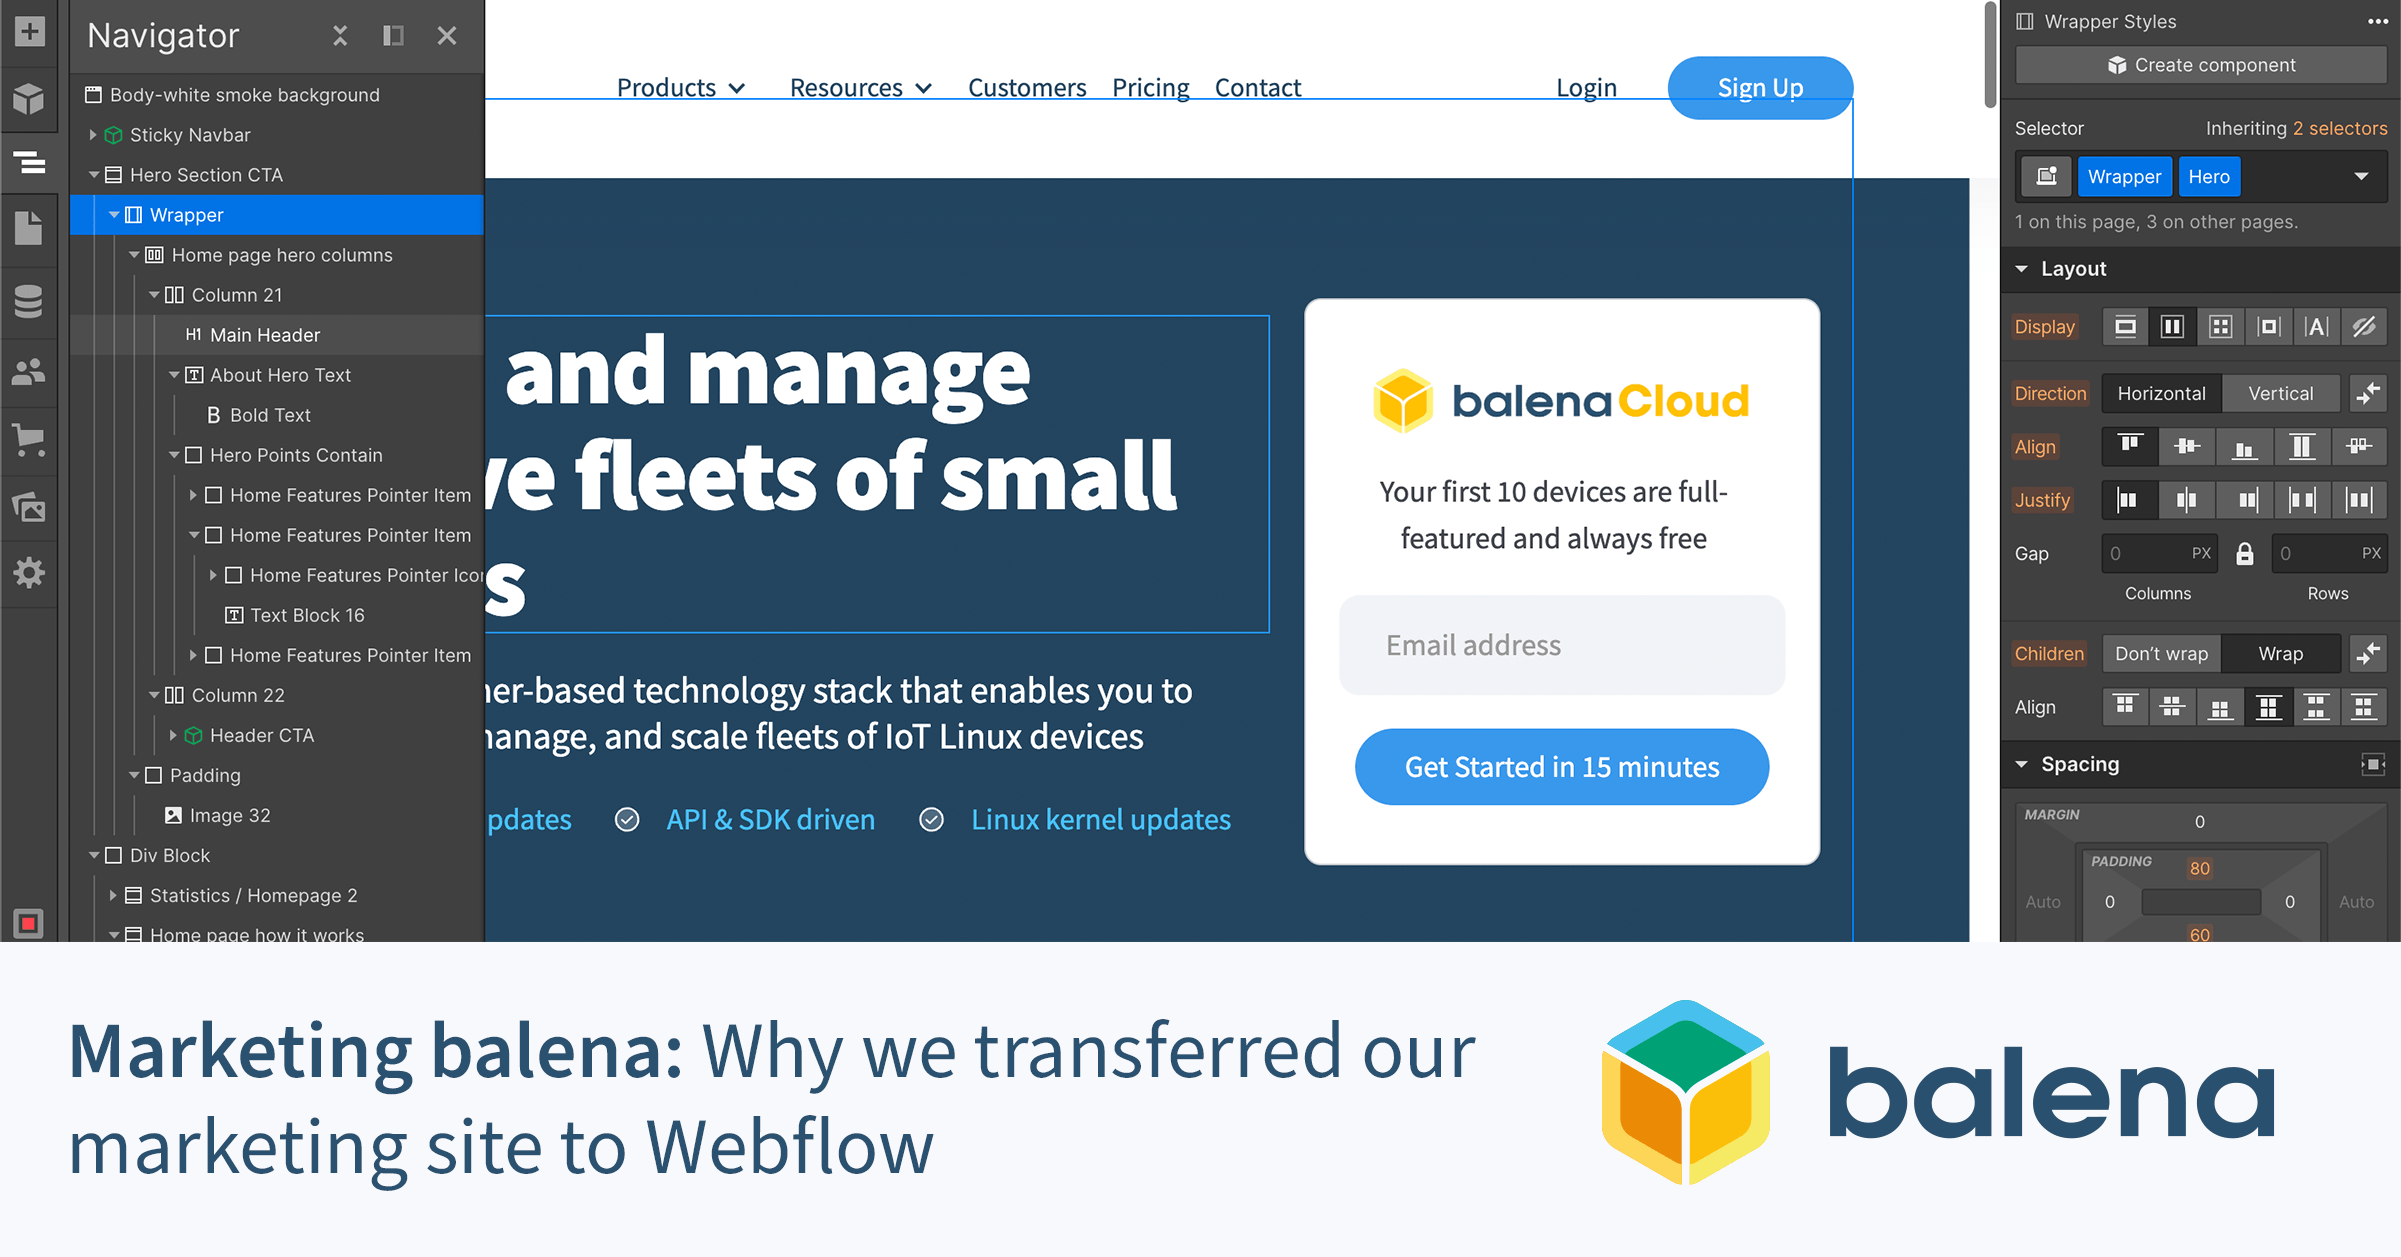 Marketing balena: Why we transferred our marketing site to Webflow